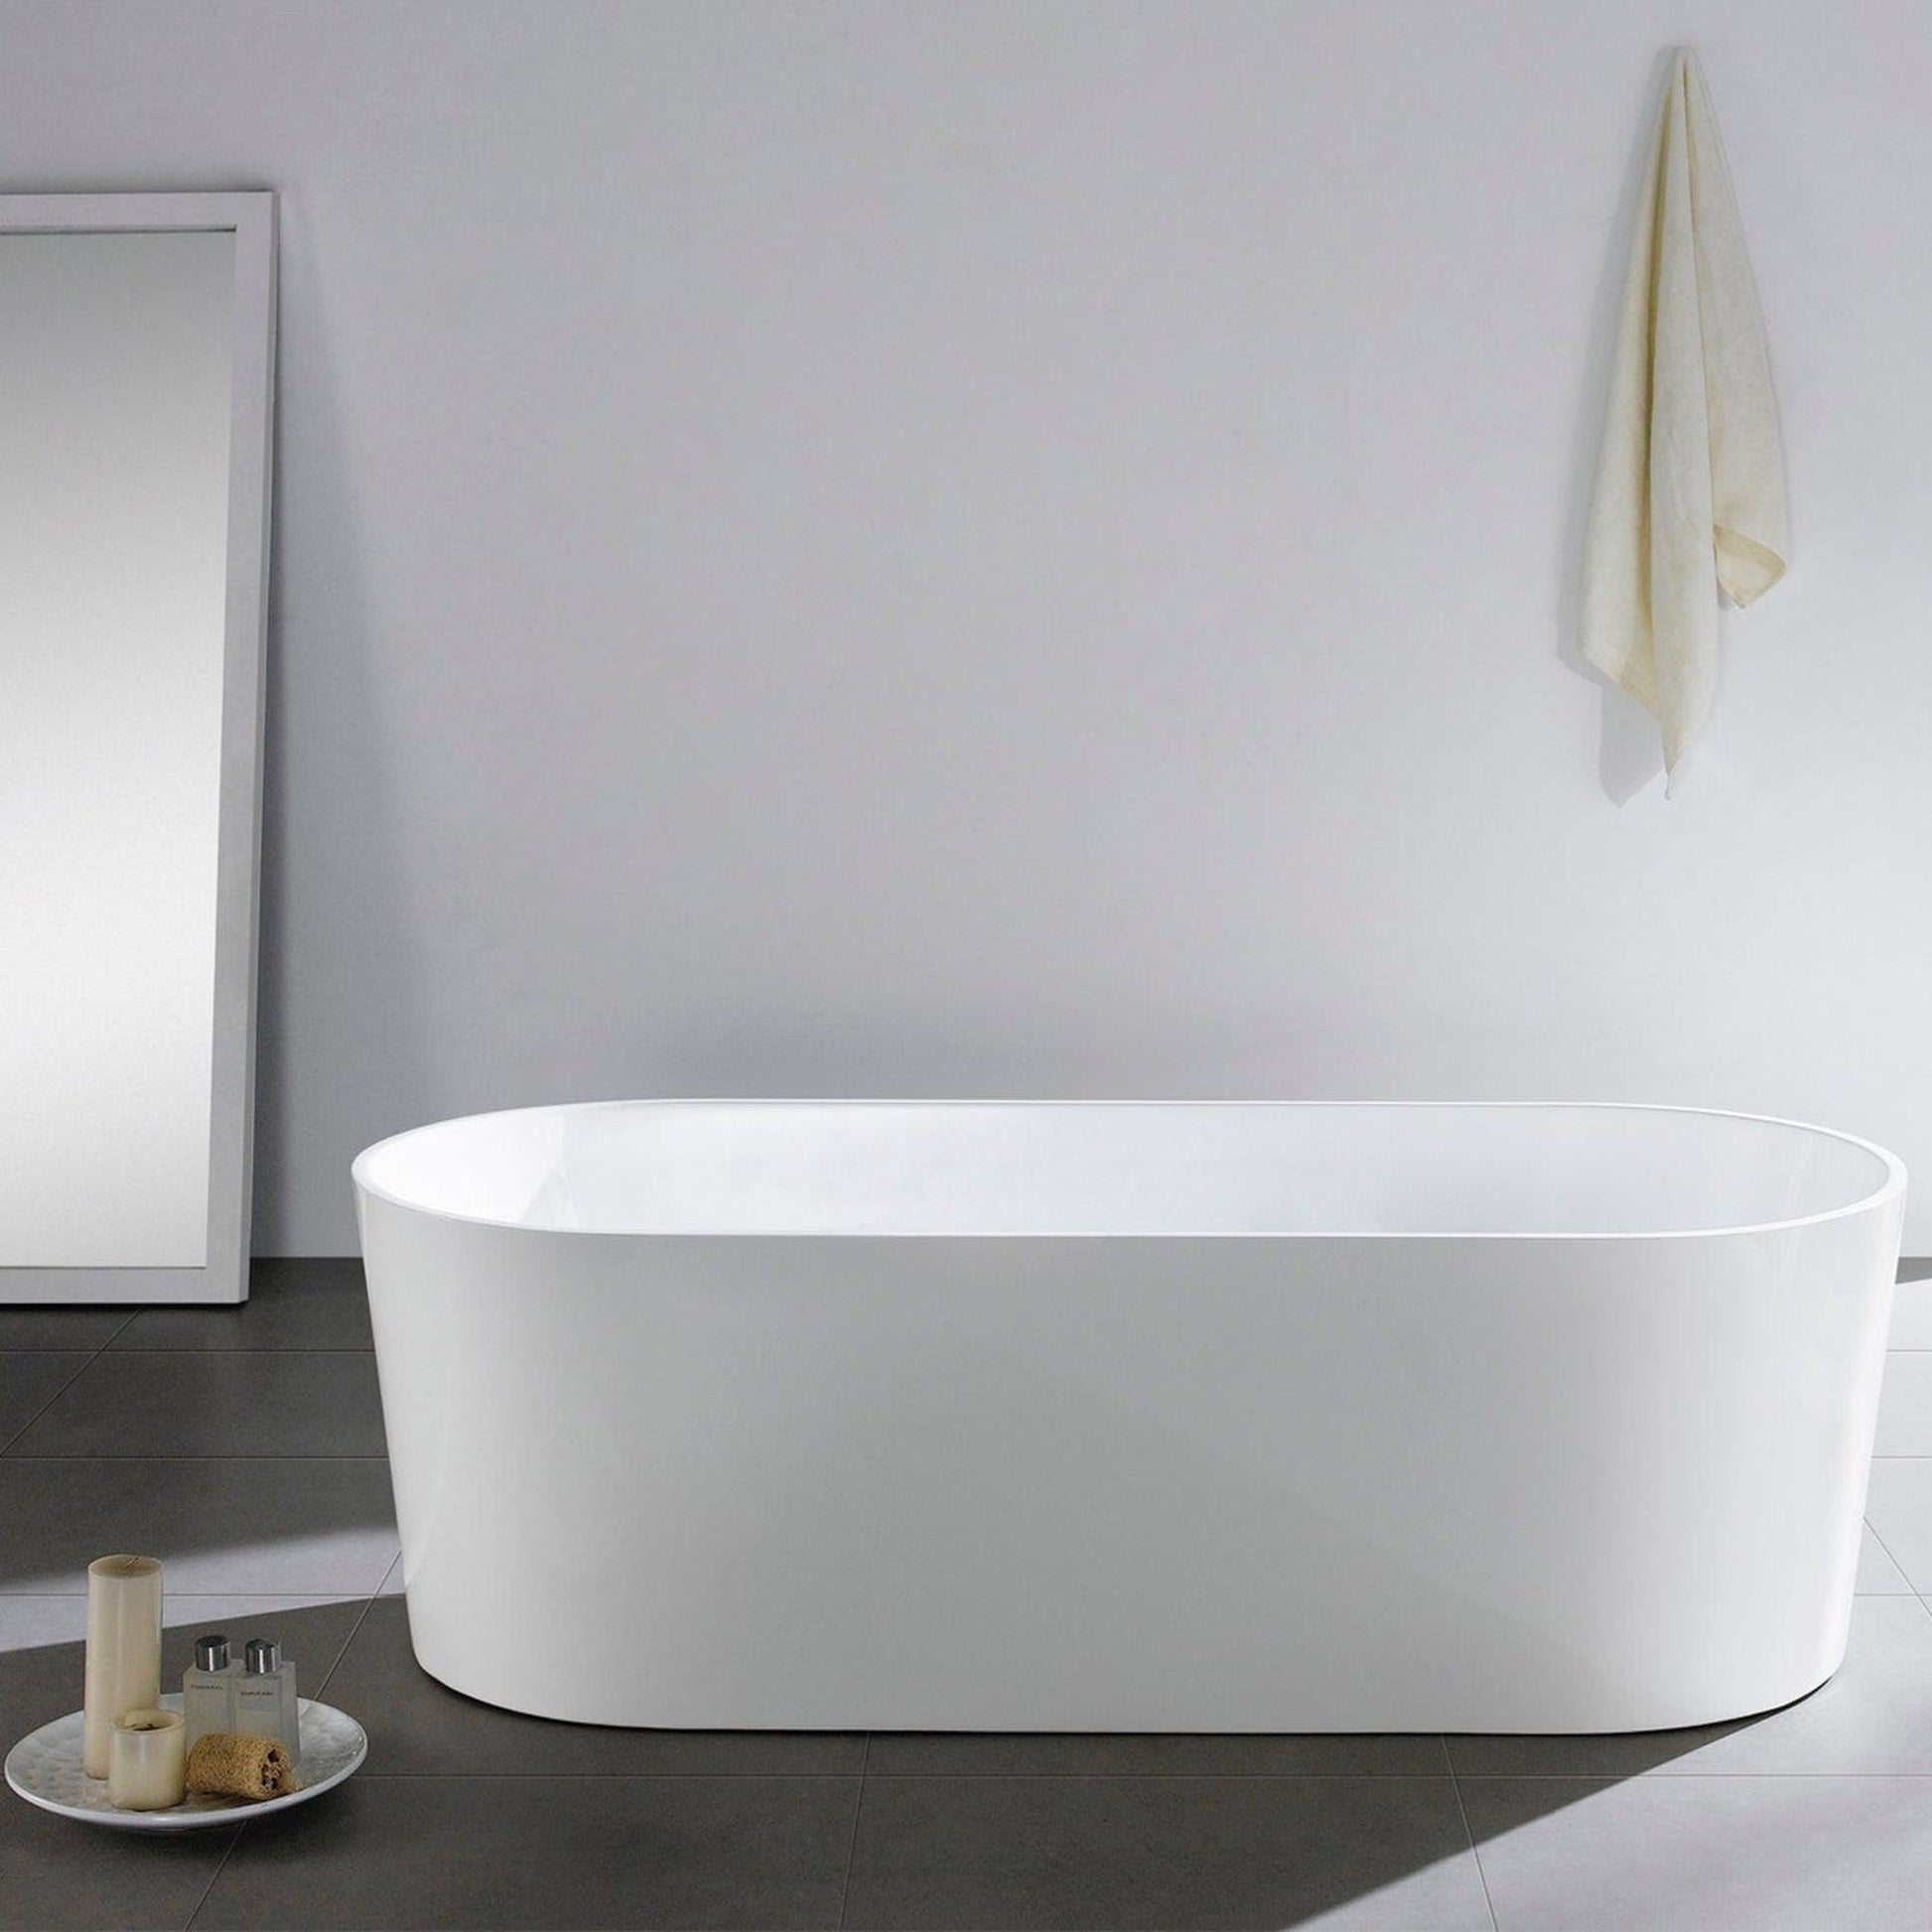 Eviva Chloe 59" x 30" White Freestanding Rectangular Acrylic Soaking Bathtub